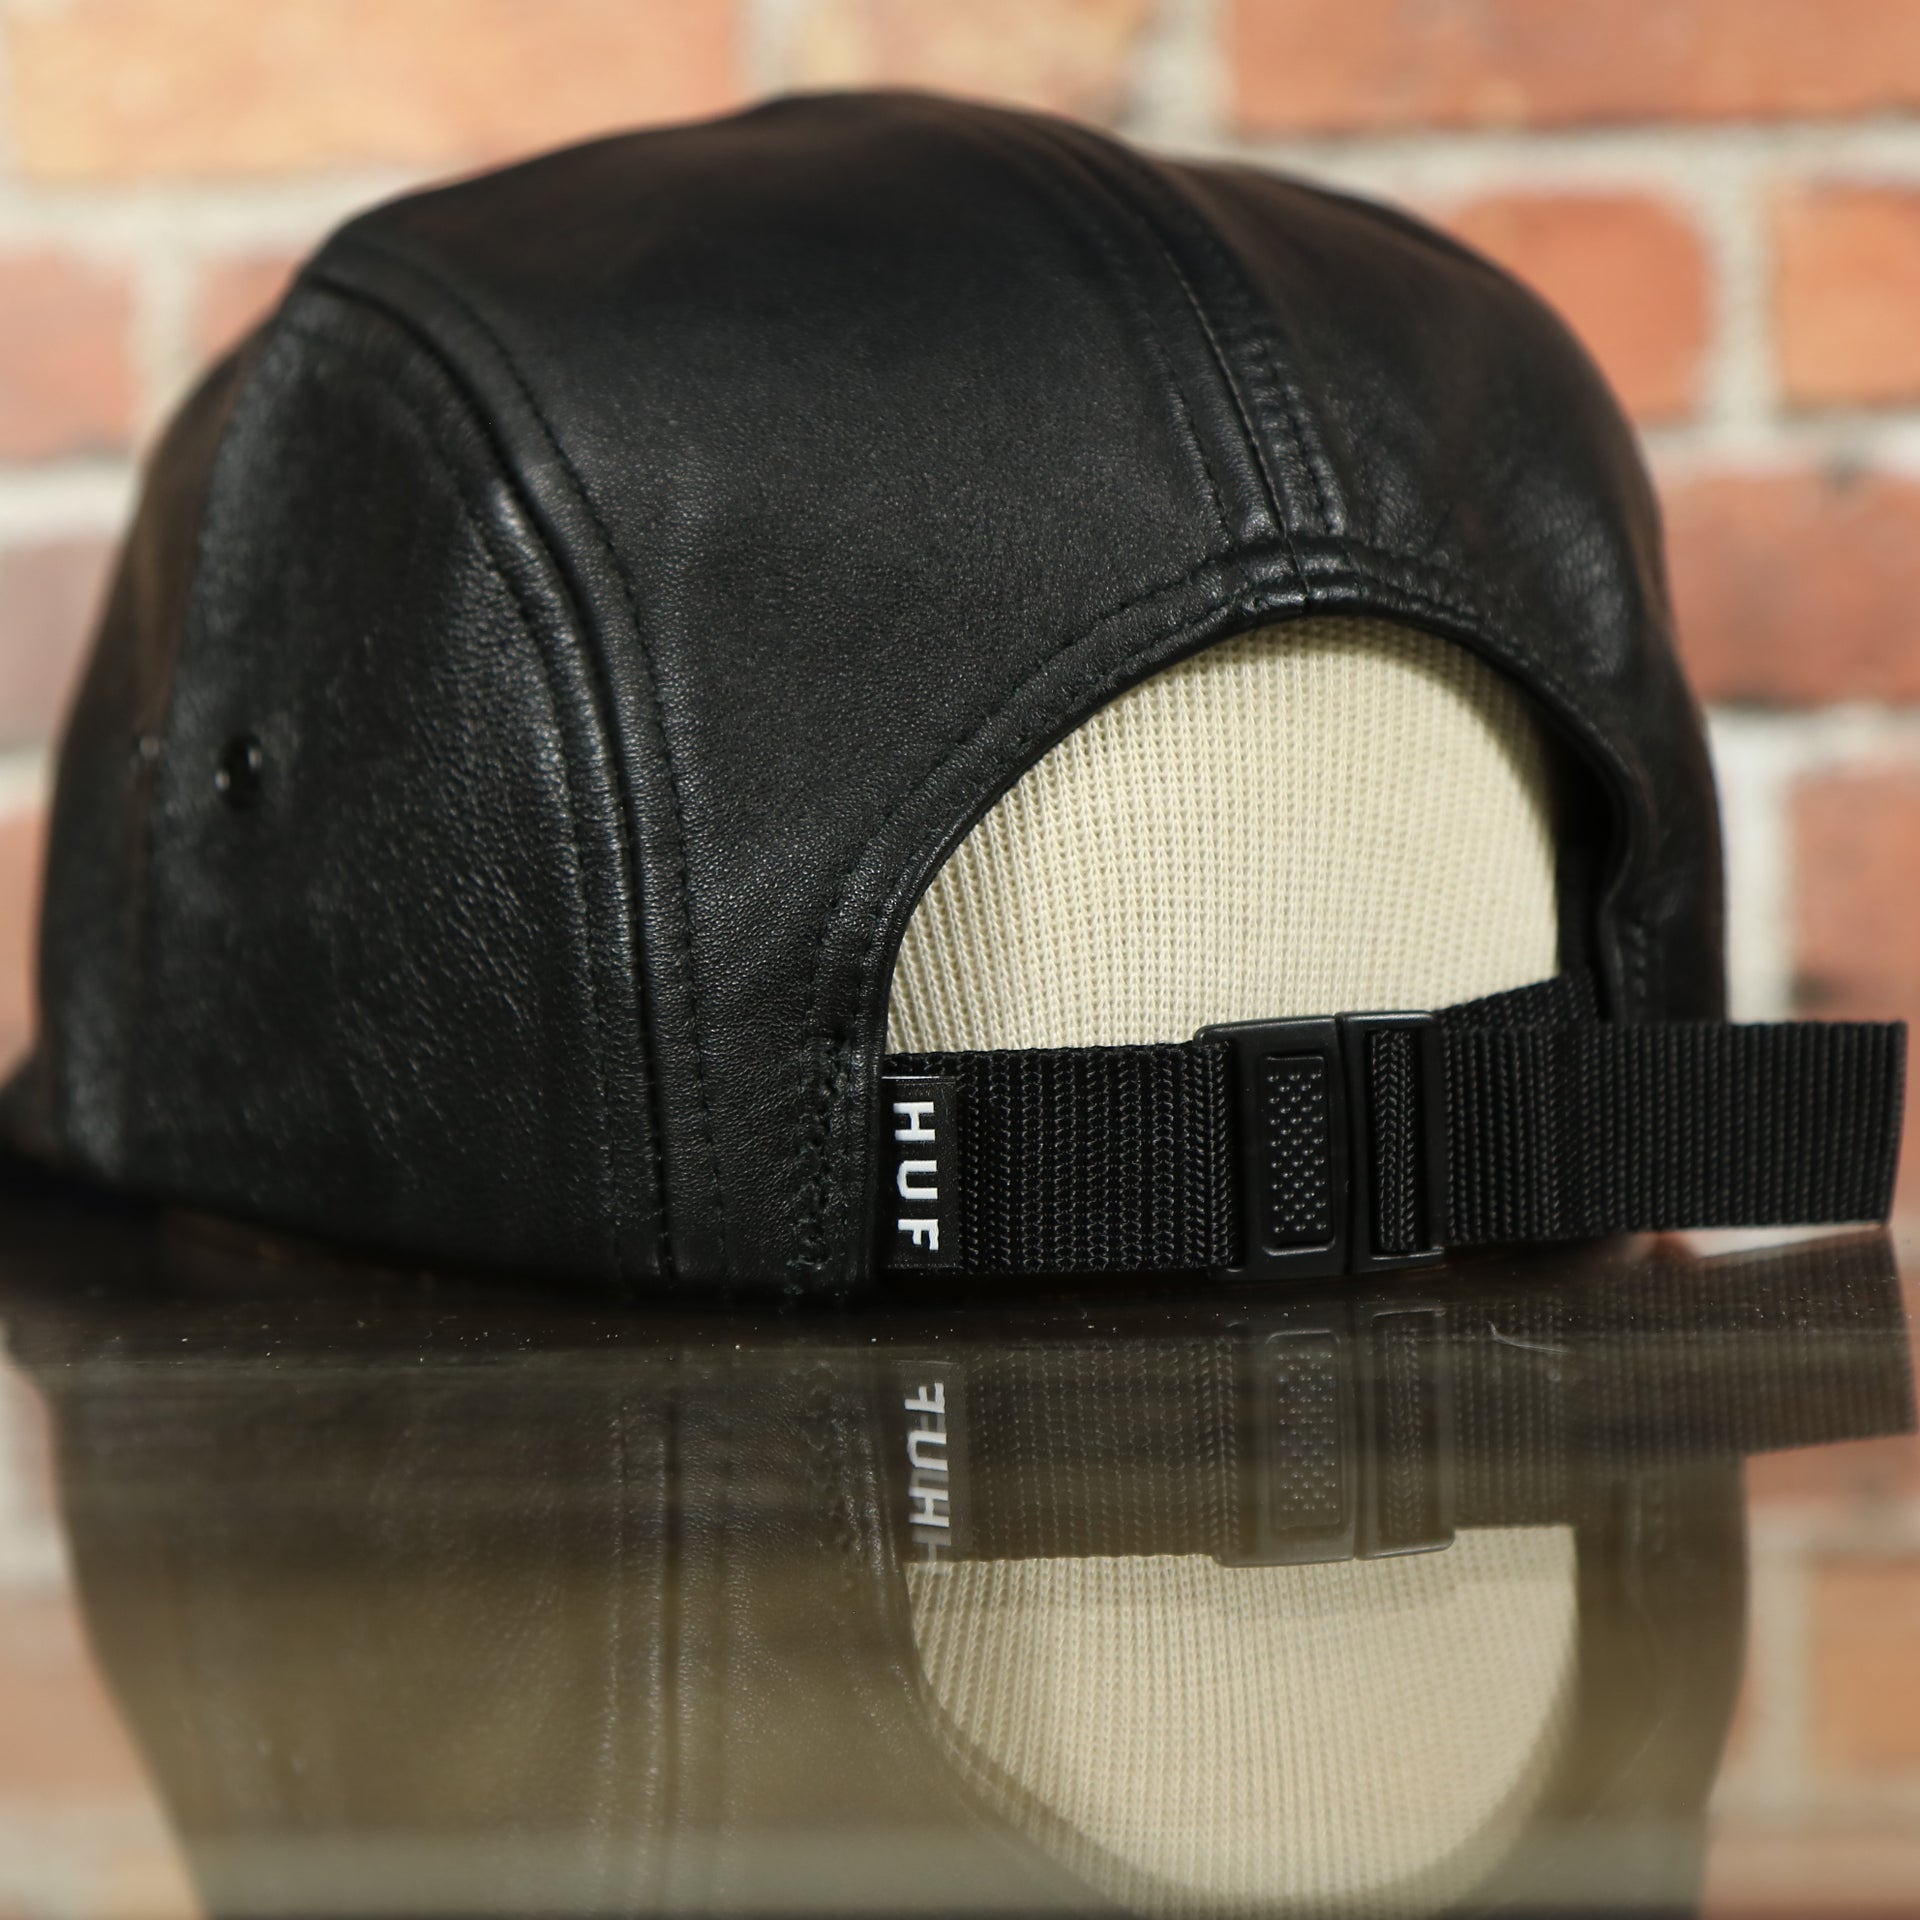 adjustable strap on the Huf 100% Genuine Lambskin Leather Black Five Panel Strapback Hat